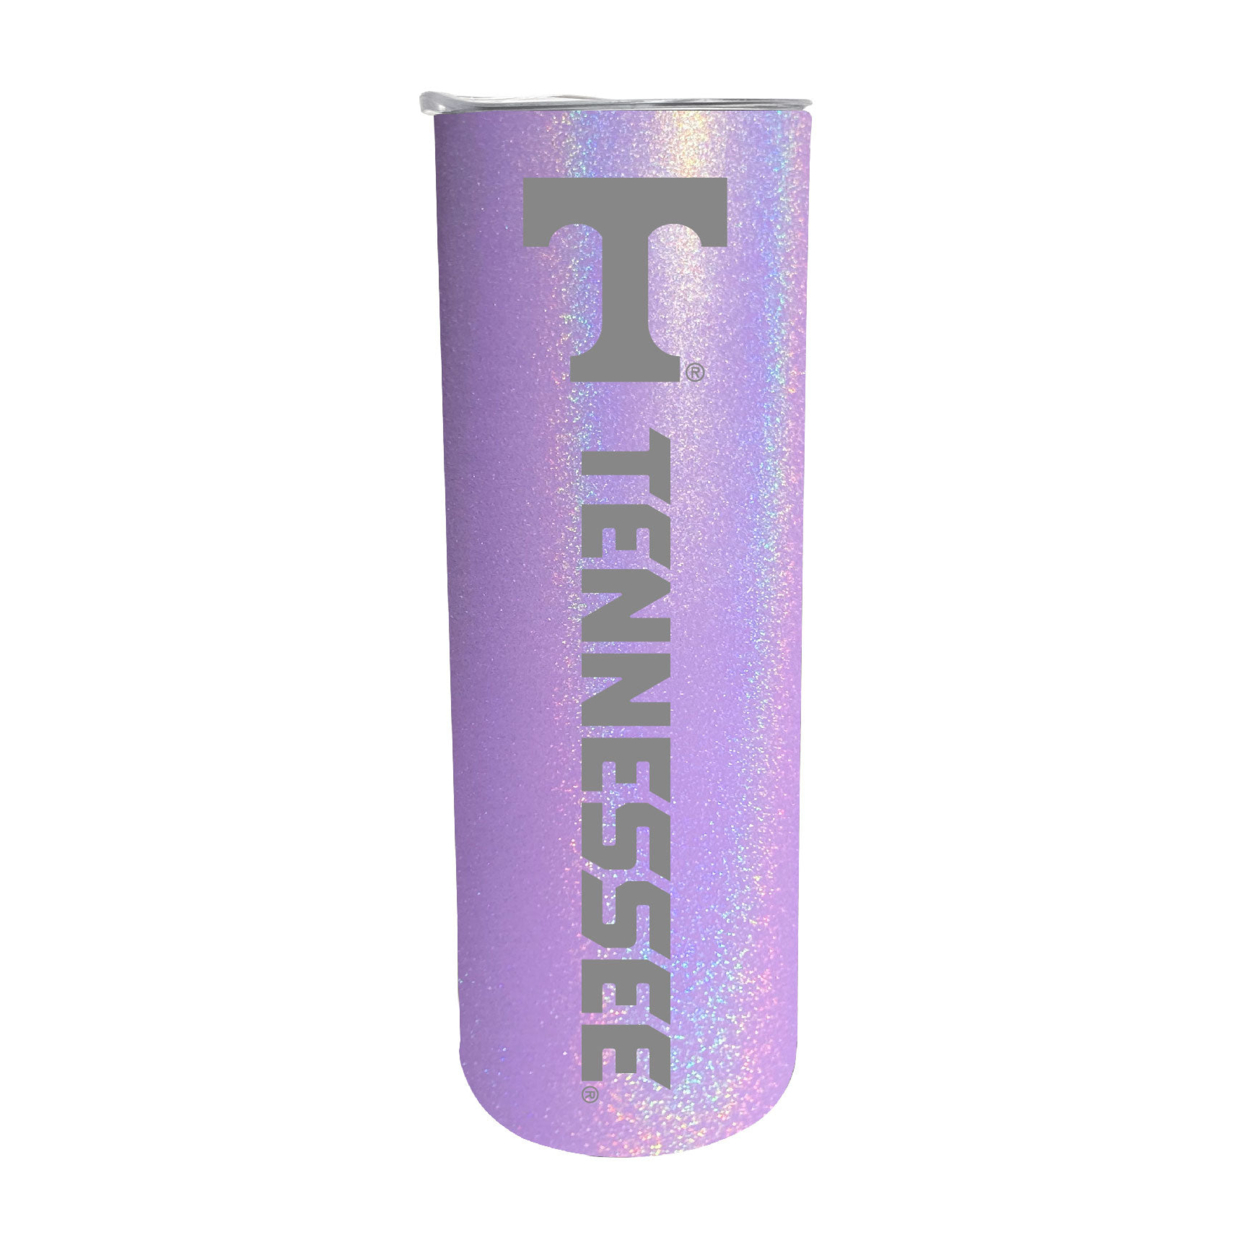 Tennessee Knoxville Volunteers 20oz Insulated Stainless Steel Skinny Tumbler - Rainbow Glitter Purple